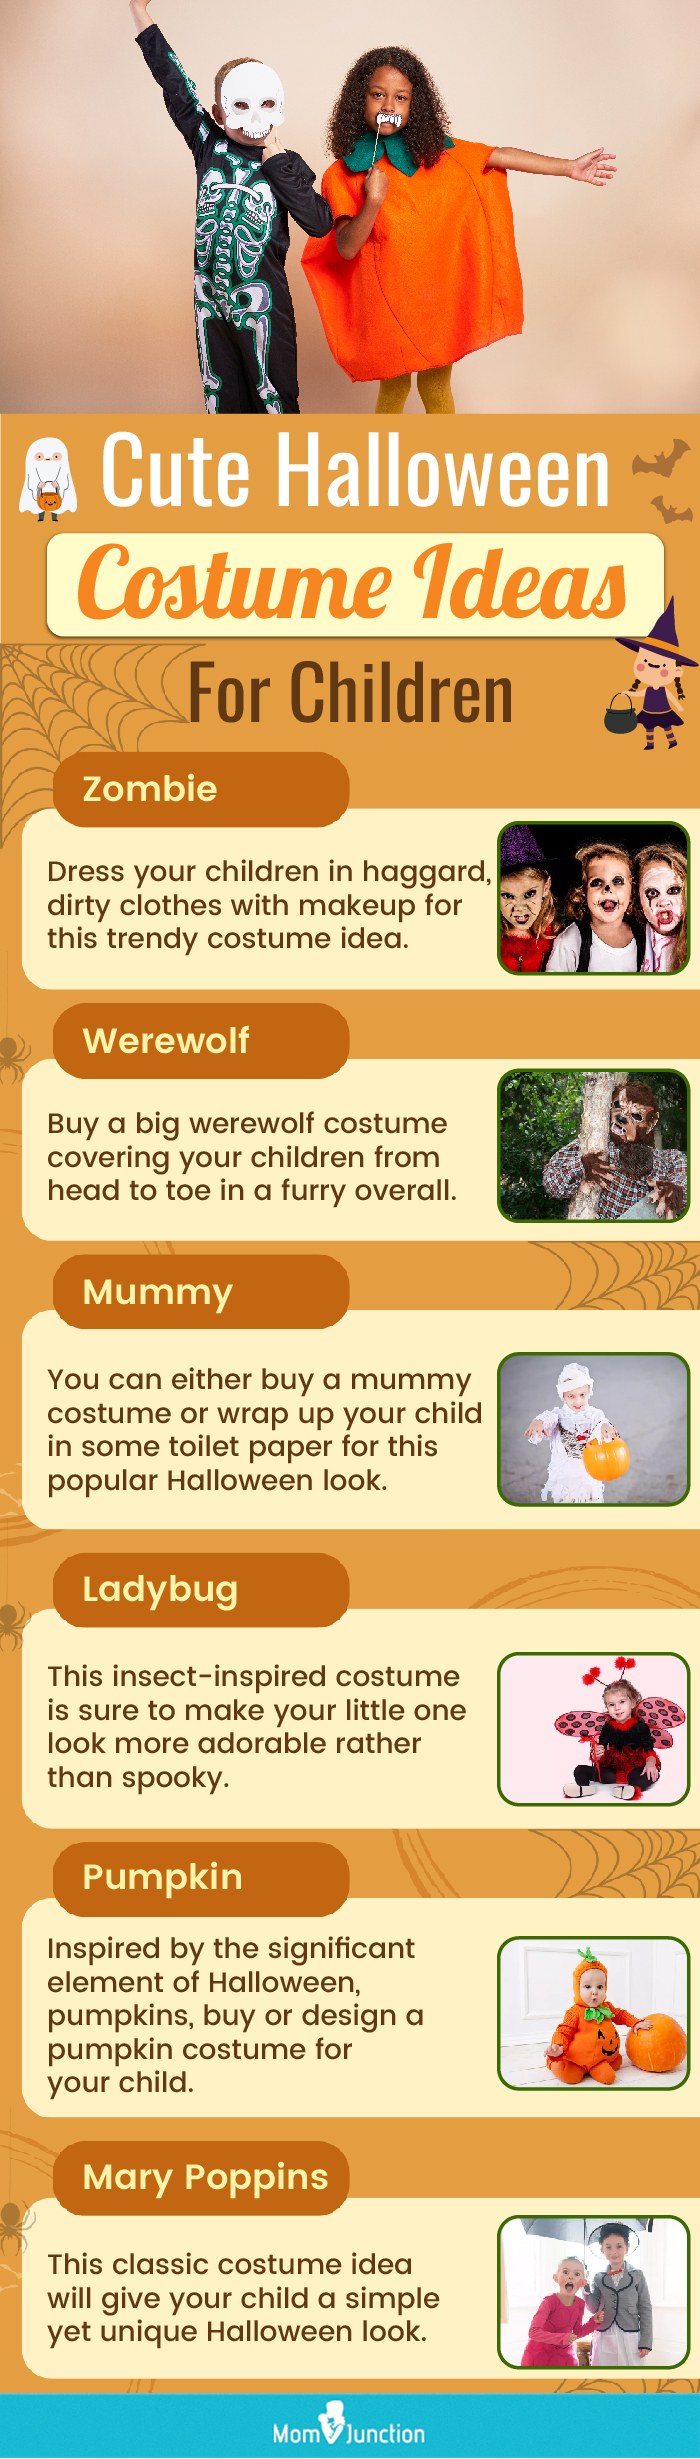 cute halloween costume ideas for children (infographic)